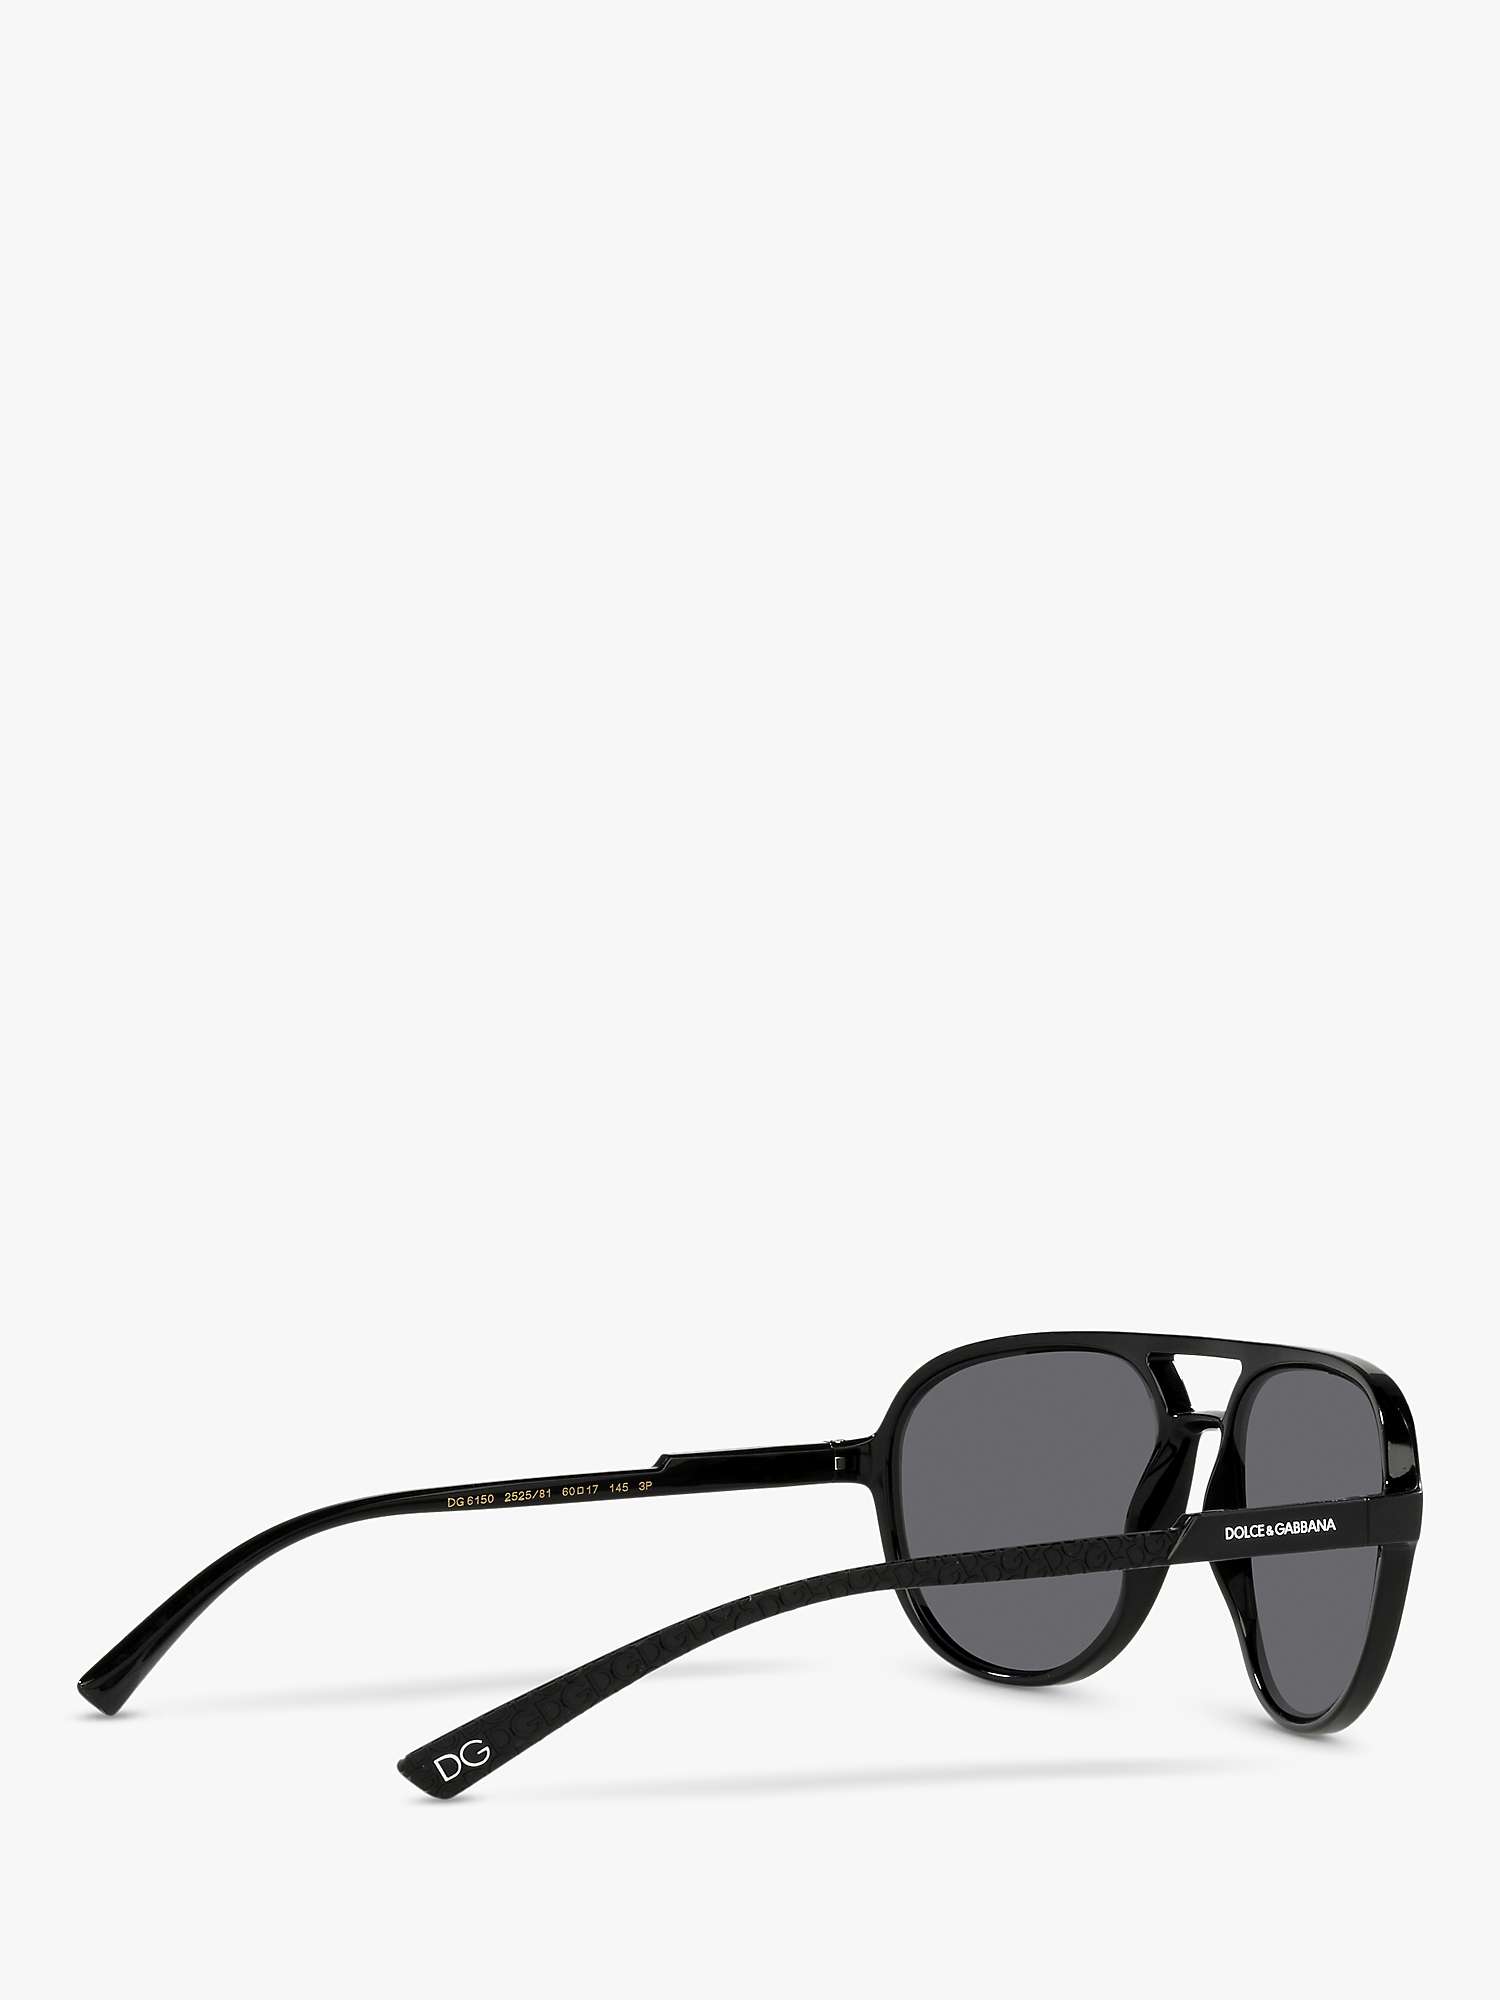 Buy Dolce & Gabbana DG6150 Men's Polarised Aviator Sunglasses, Black/Grey Online at johnlewis.com